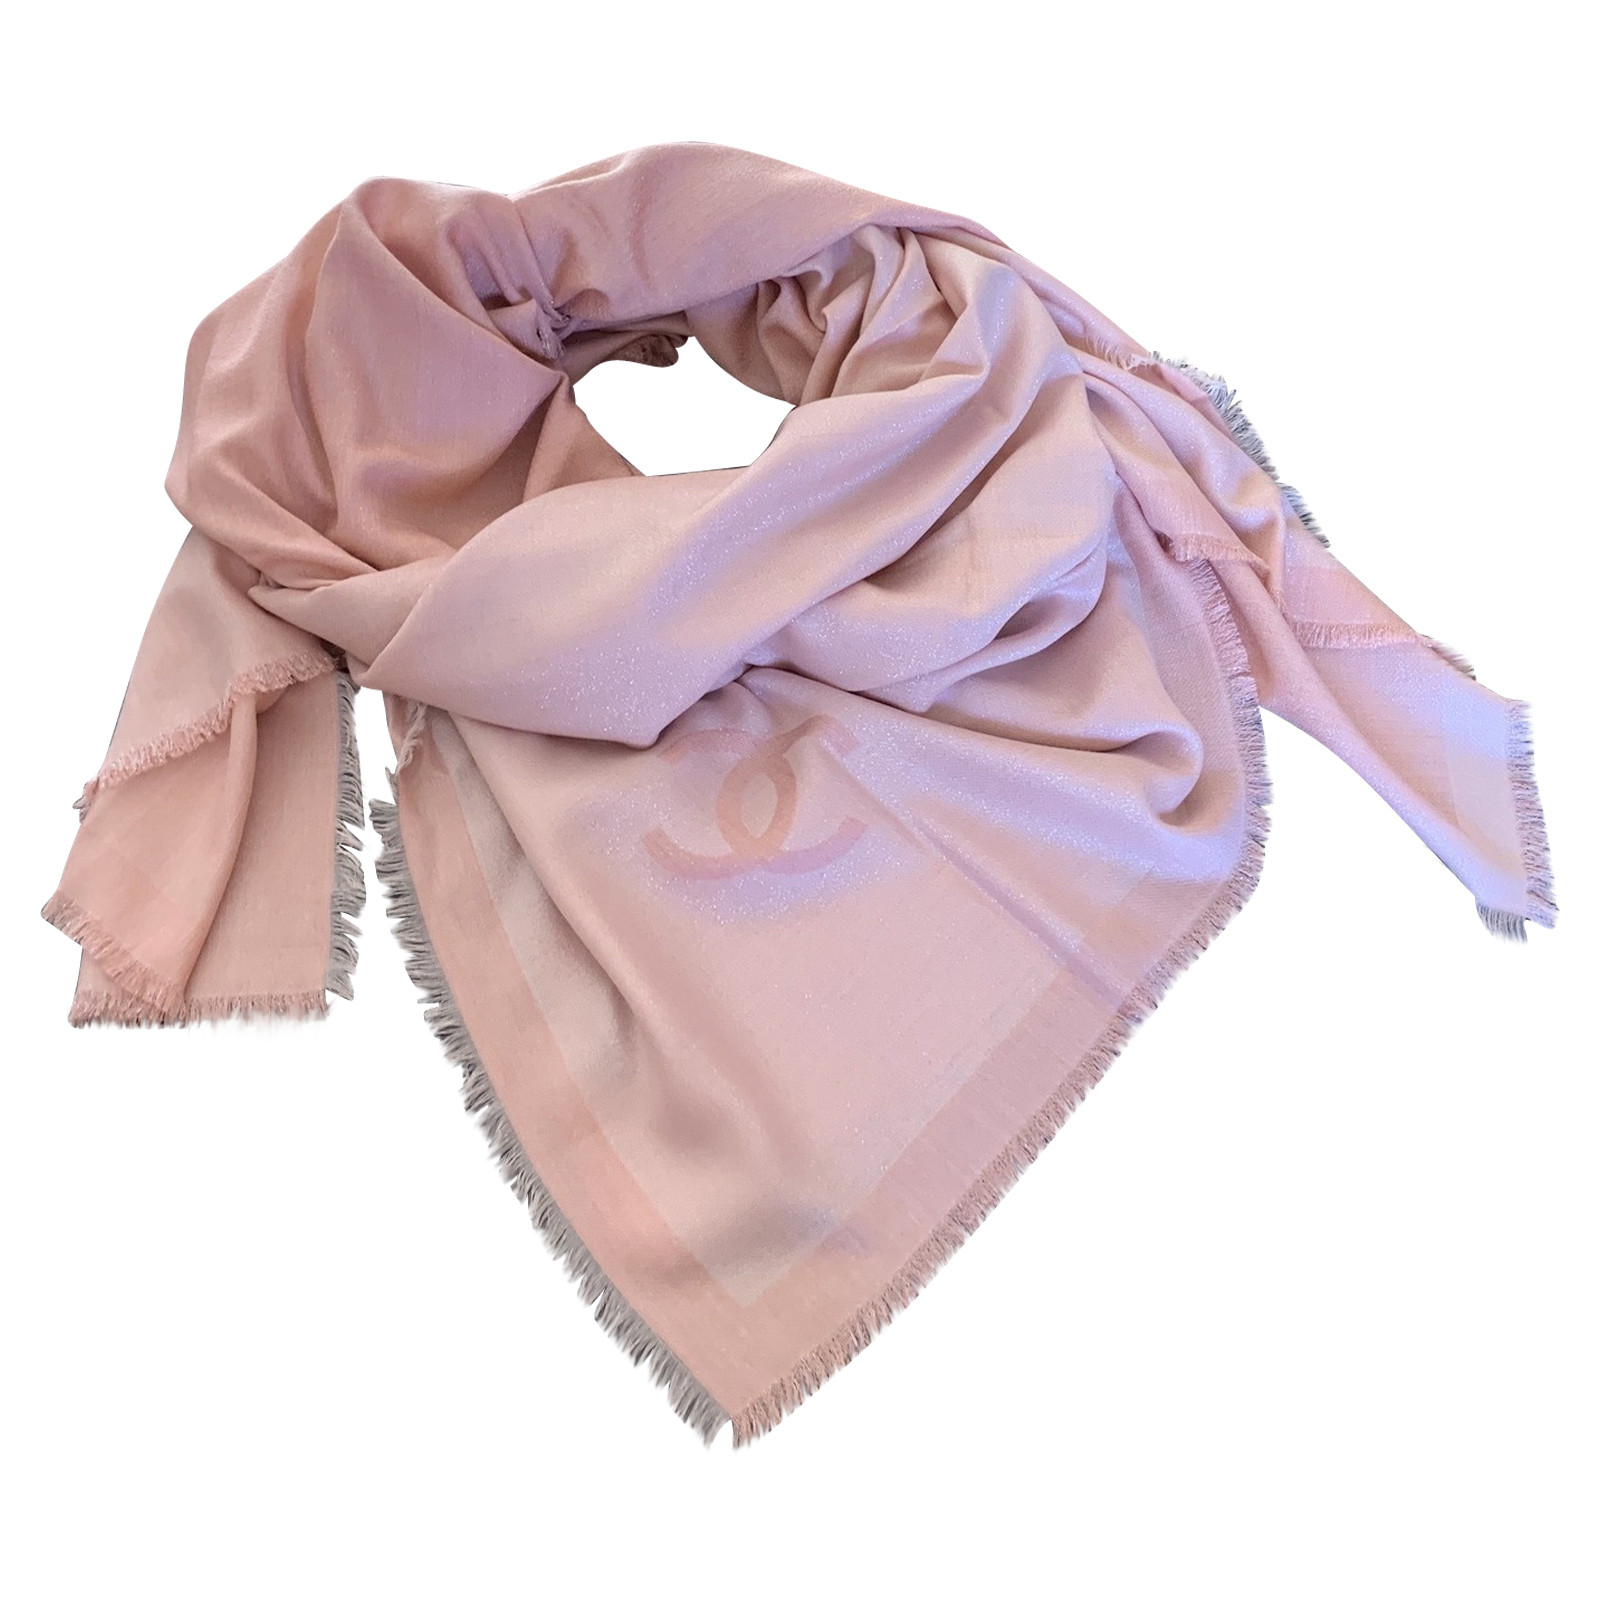 CHANEL Women's Schal/Tuch aus Kaschmir in Rosa / Pink